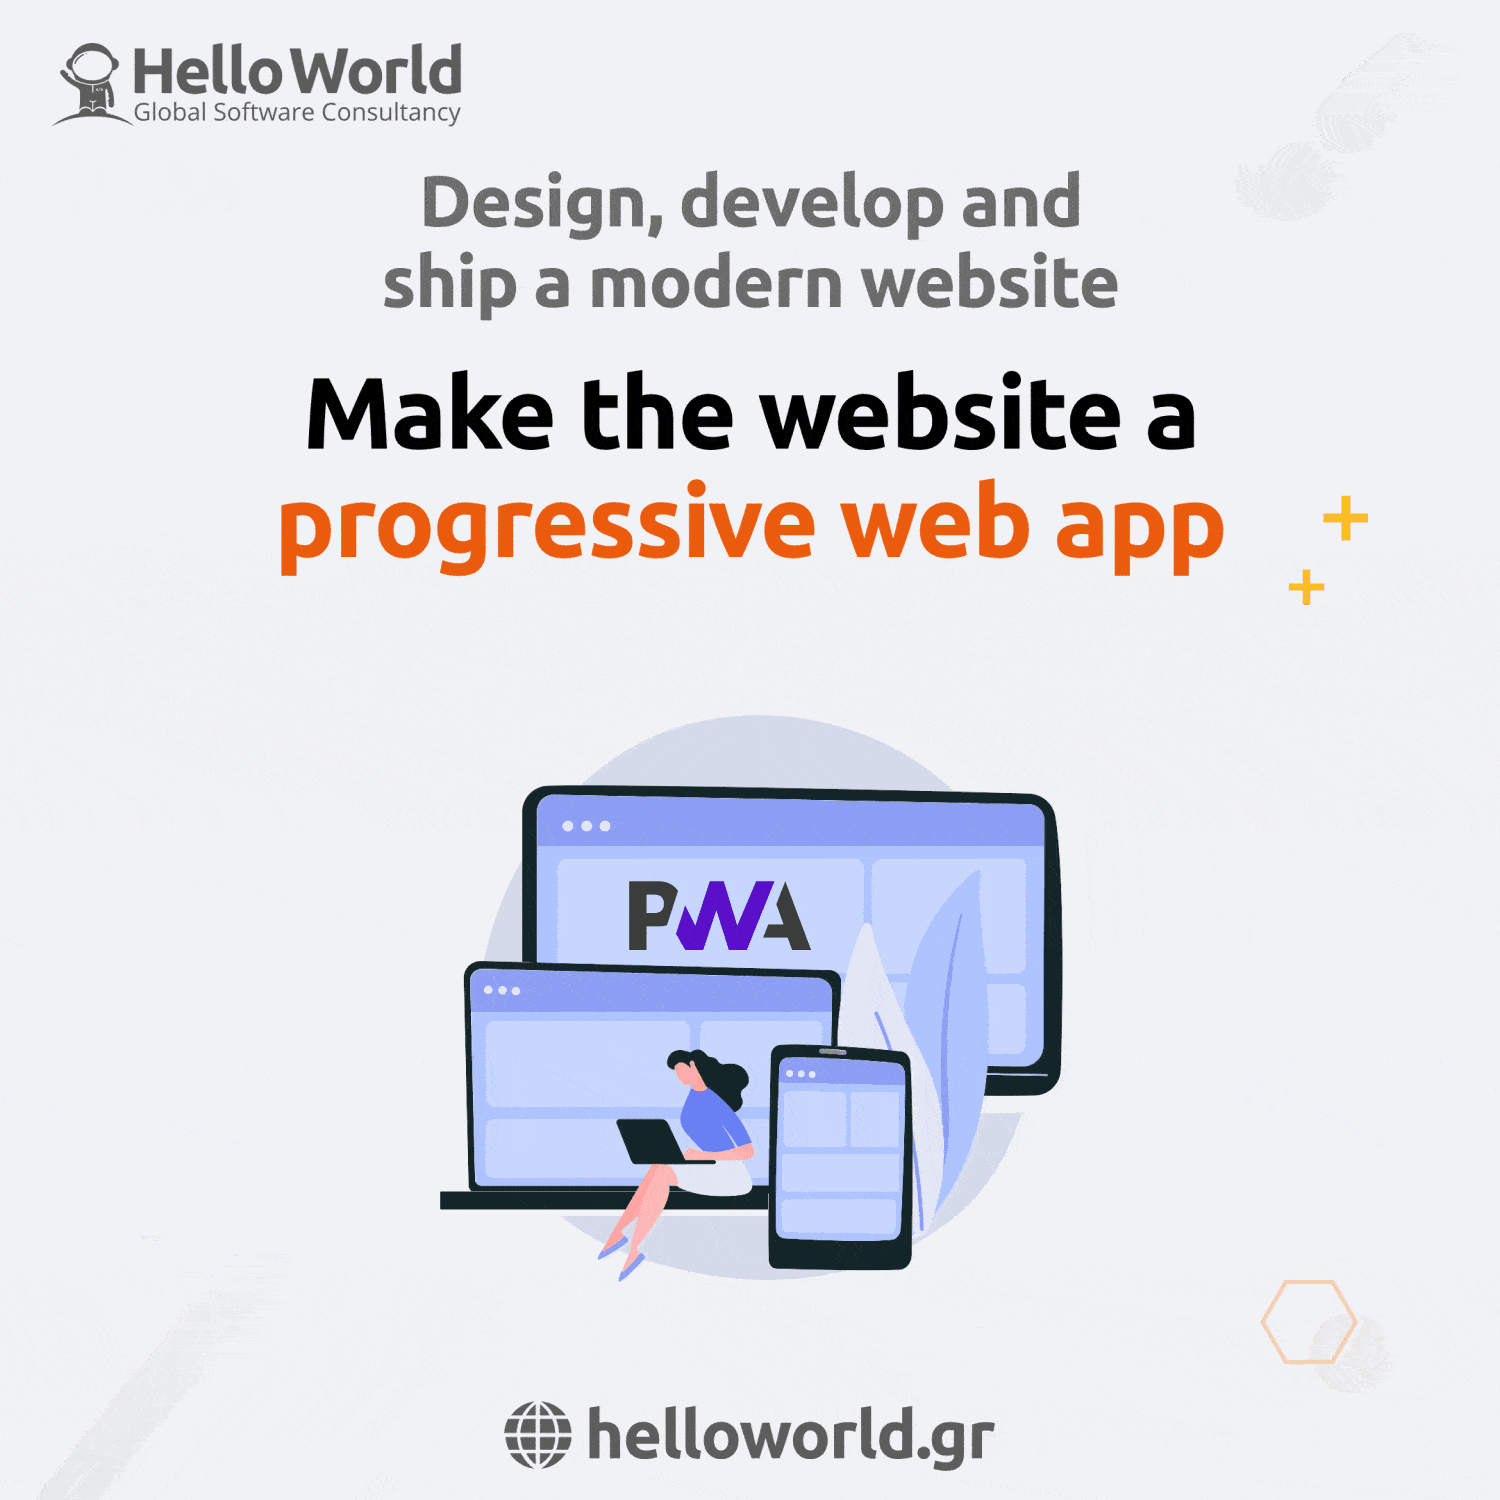 Modern Website: Make the website a Progressive Web App